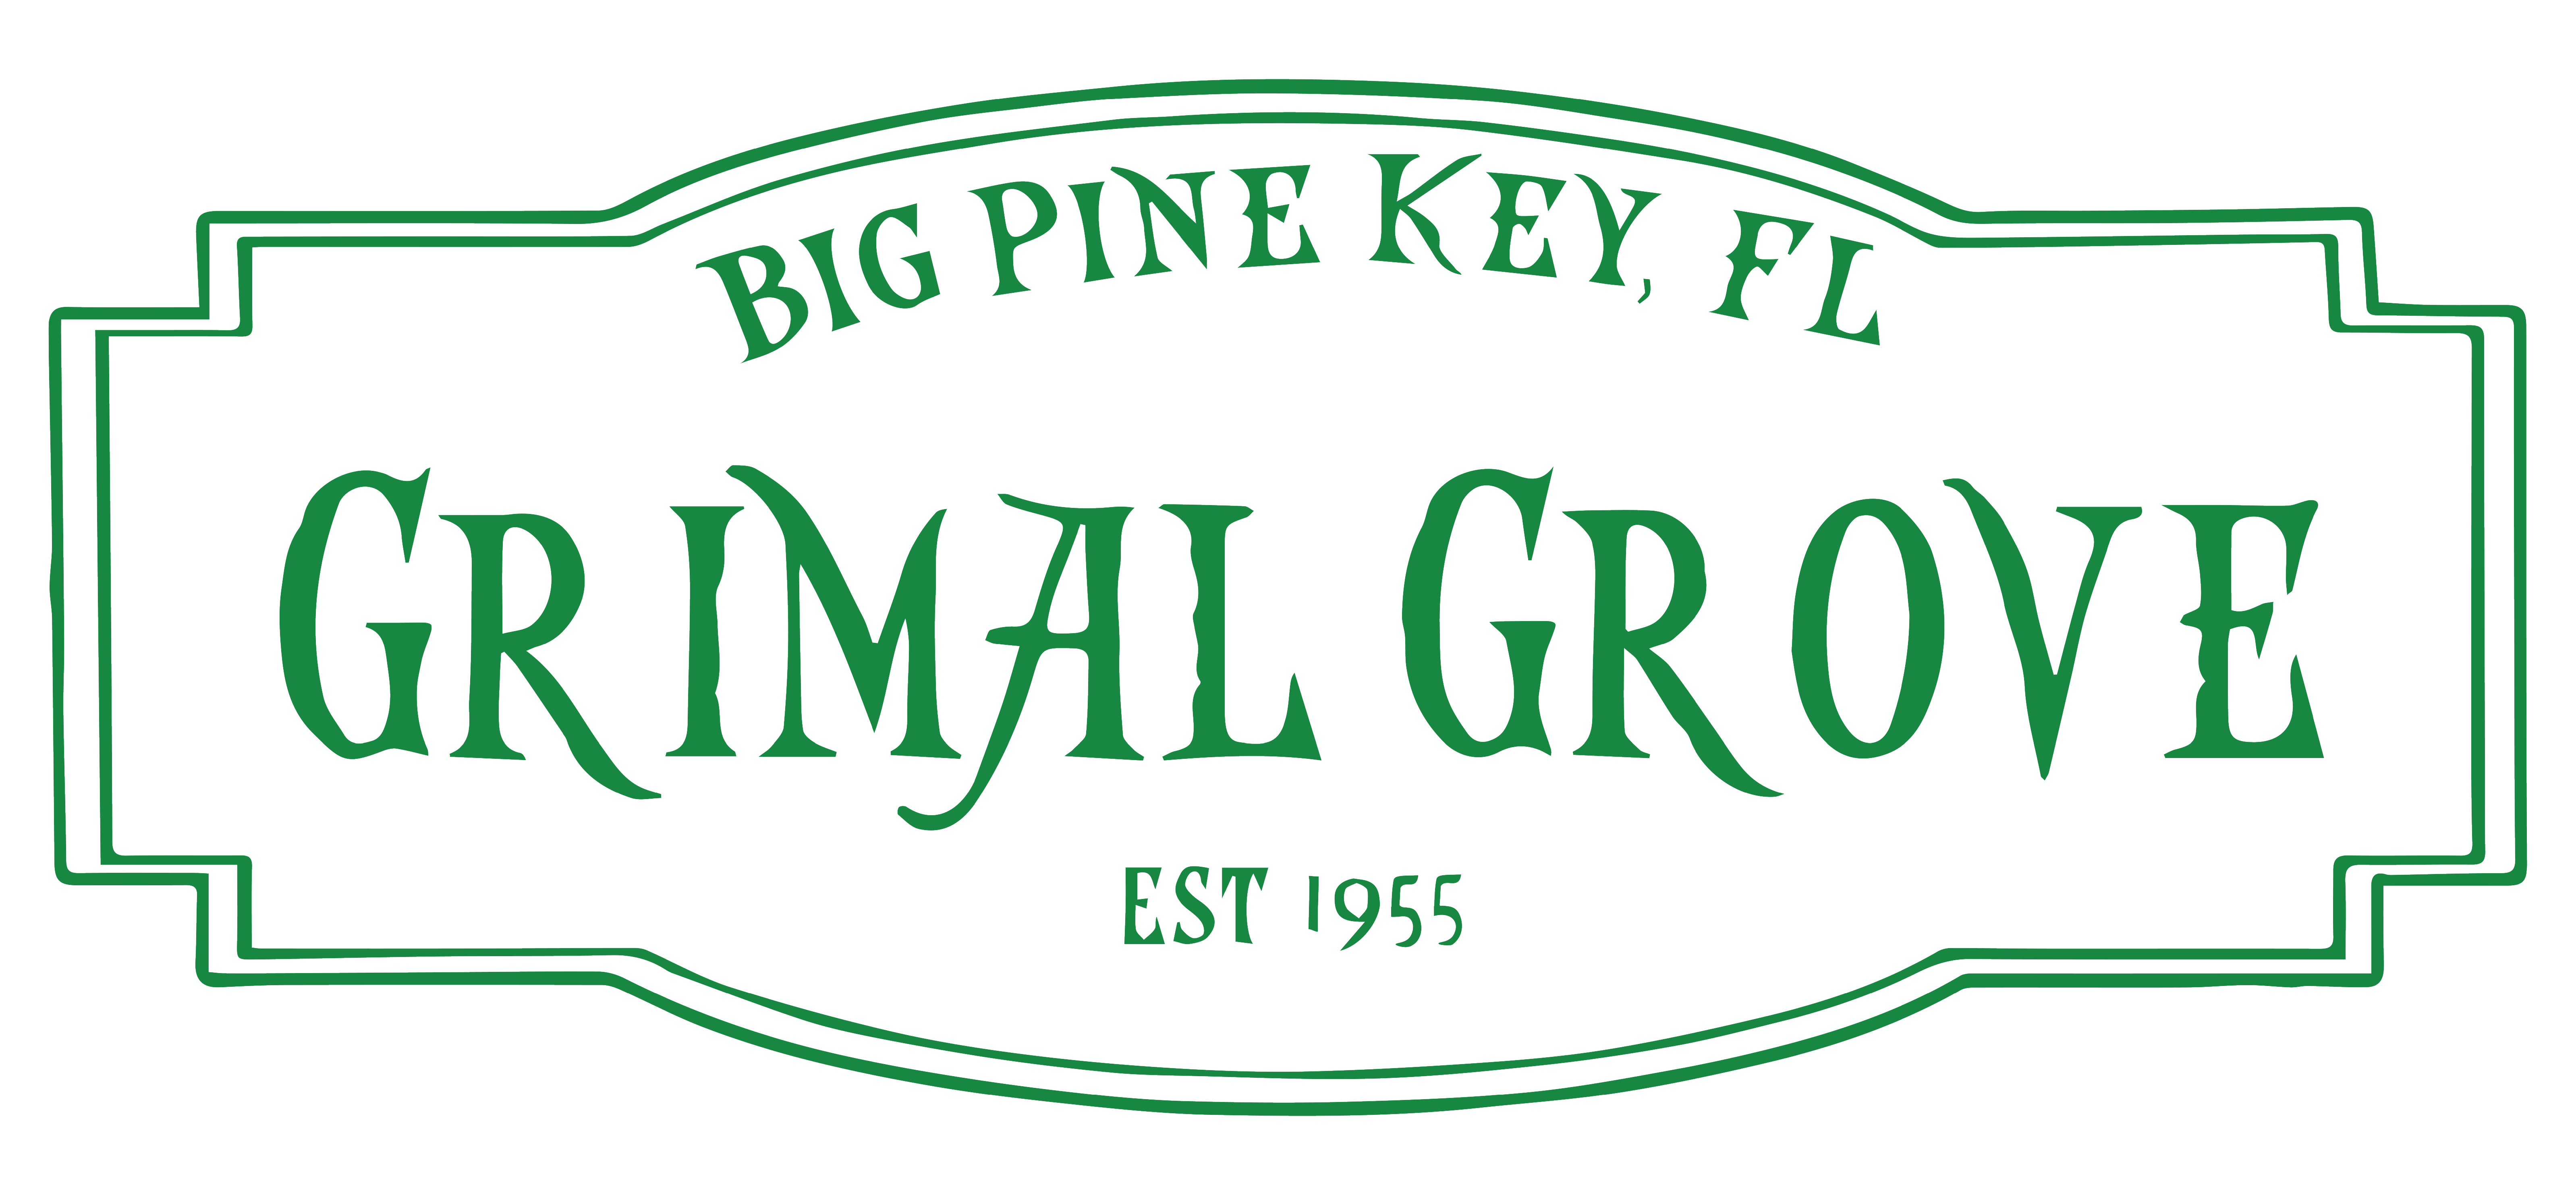 Grimal Grove, LLC. 